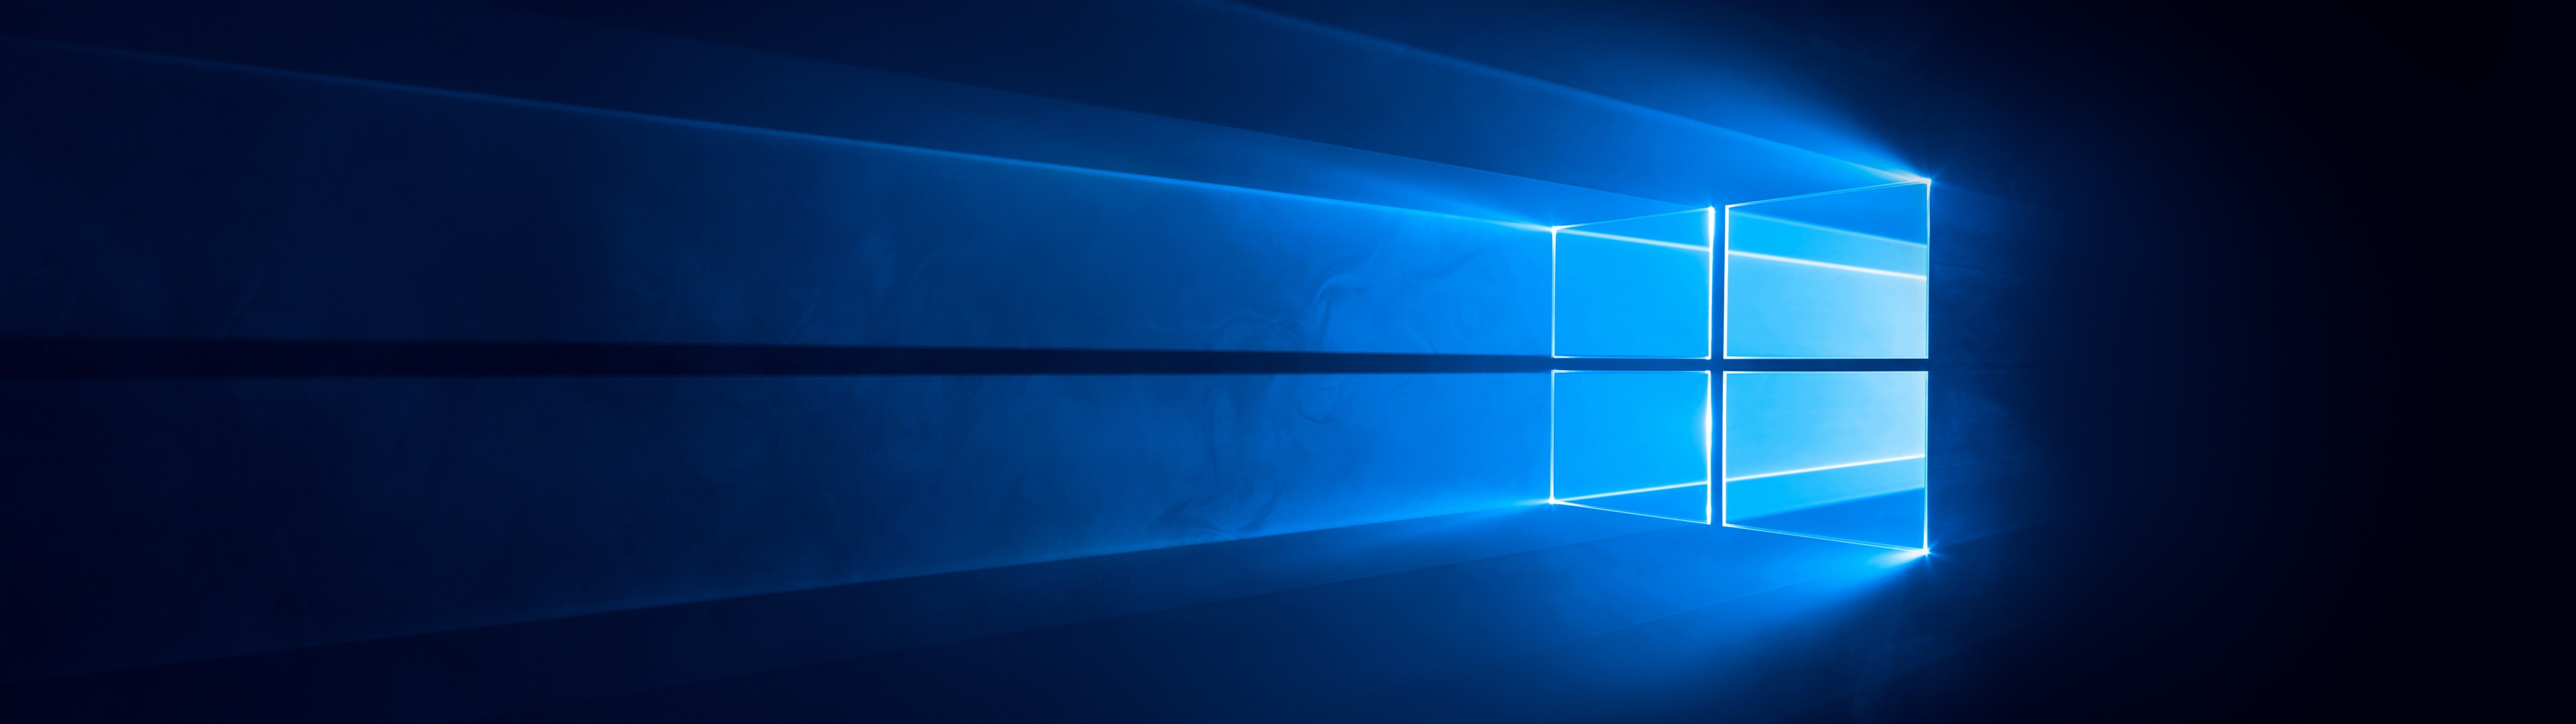 Windows 10 Wallpaper 4K, Dark, Blue background, Technology, #733